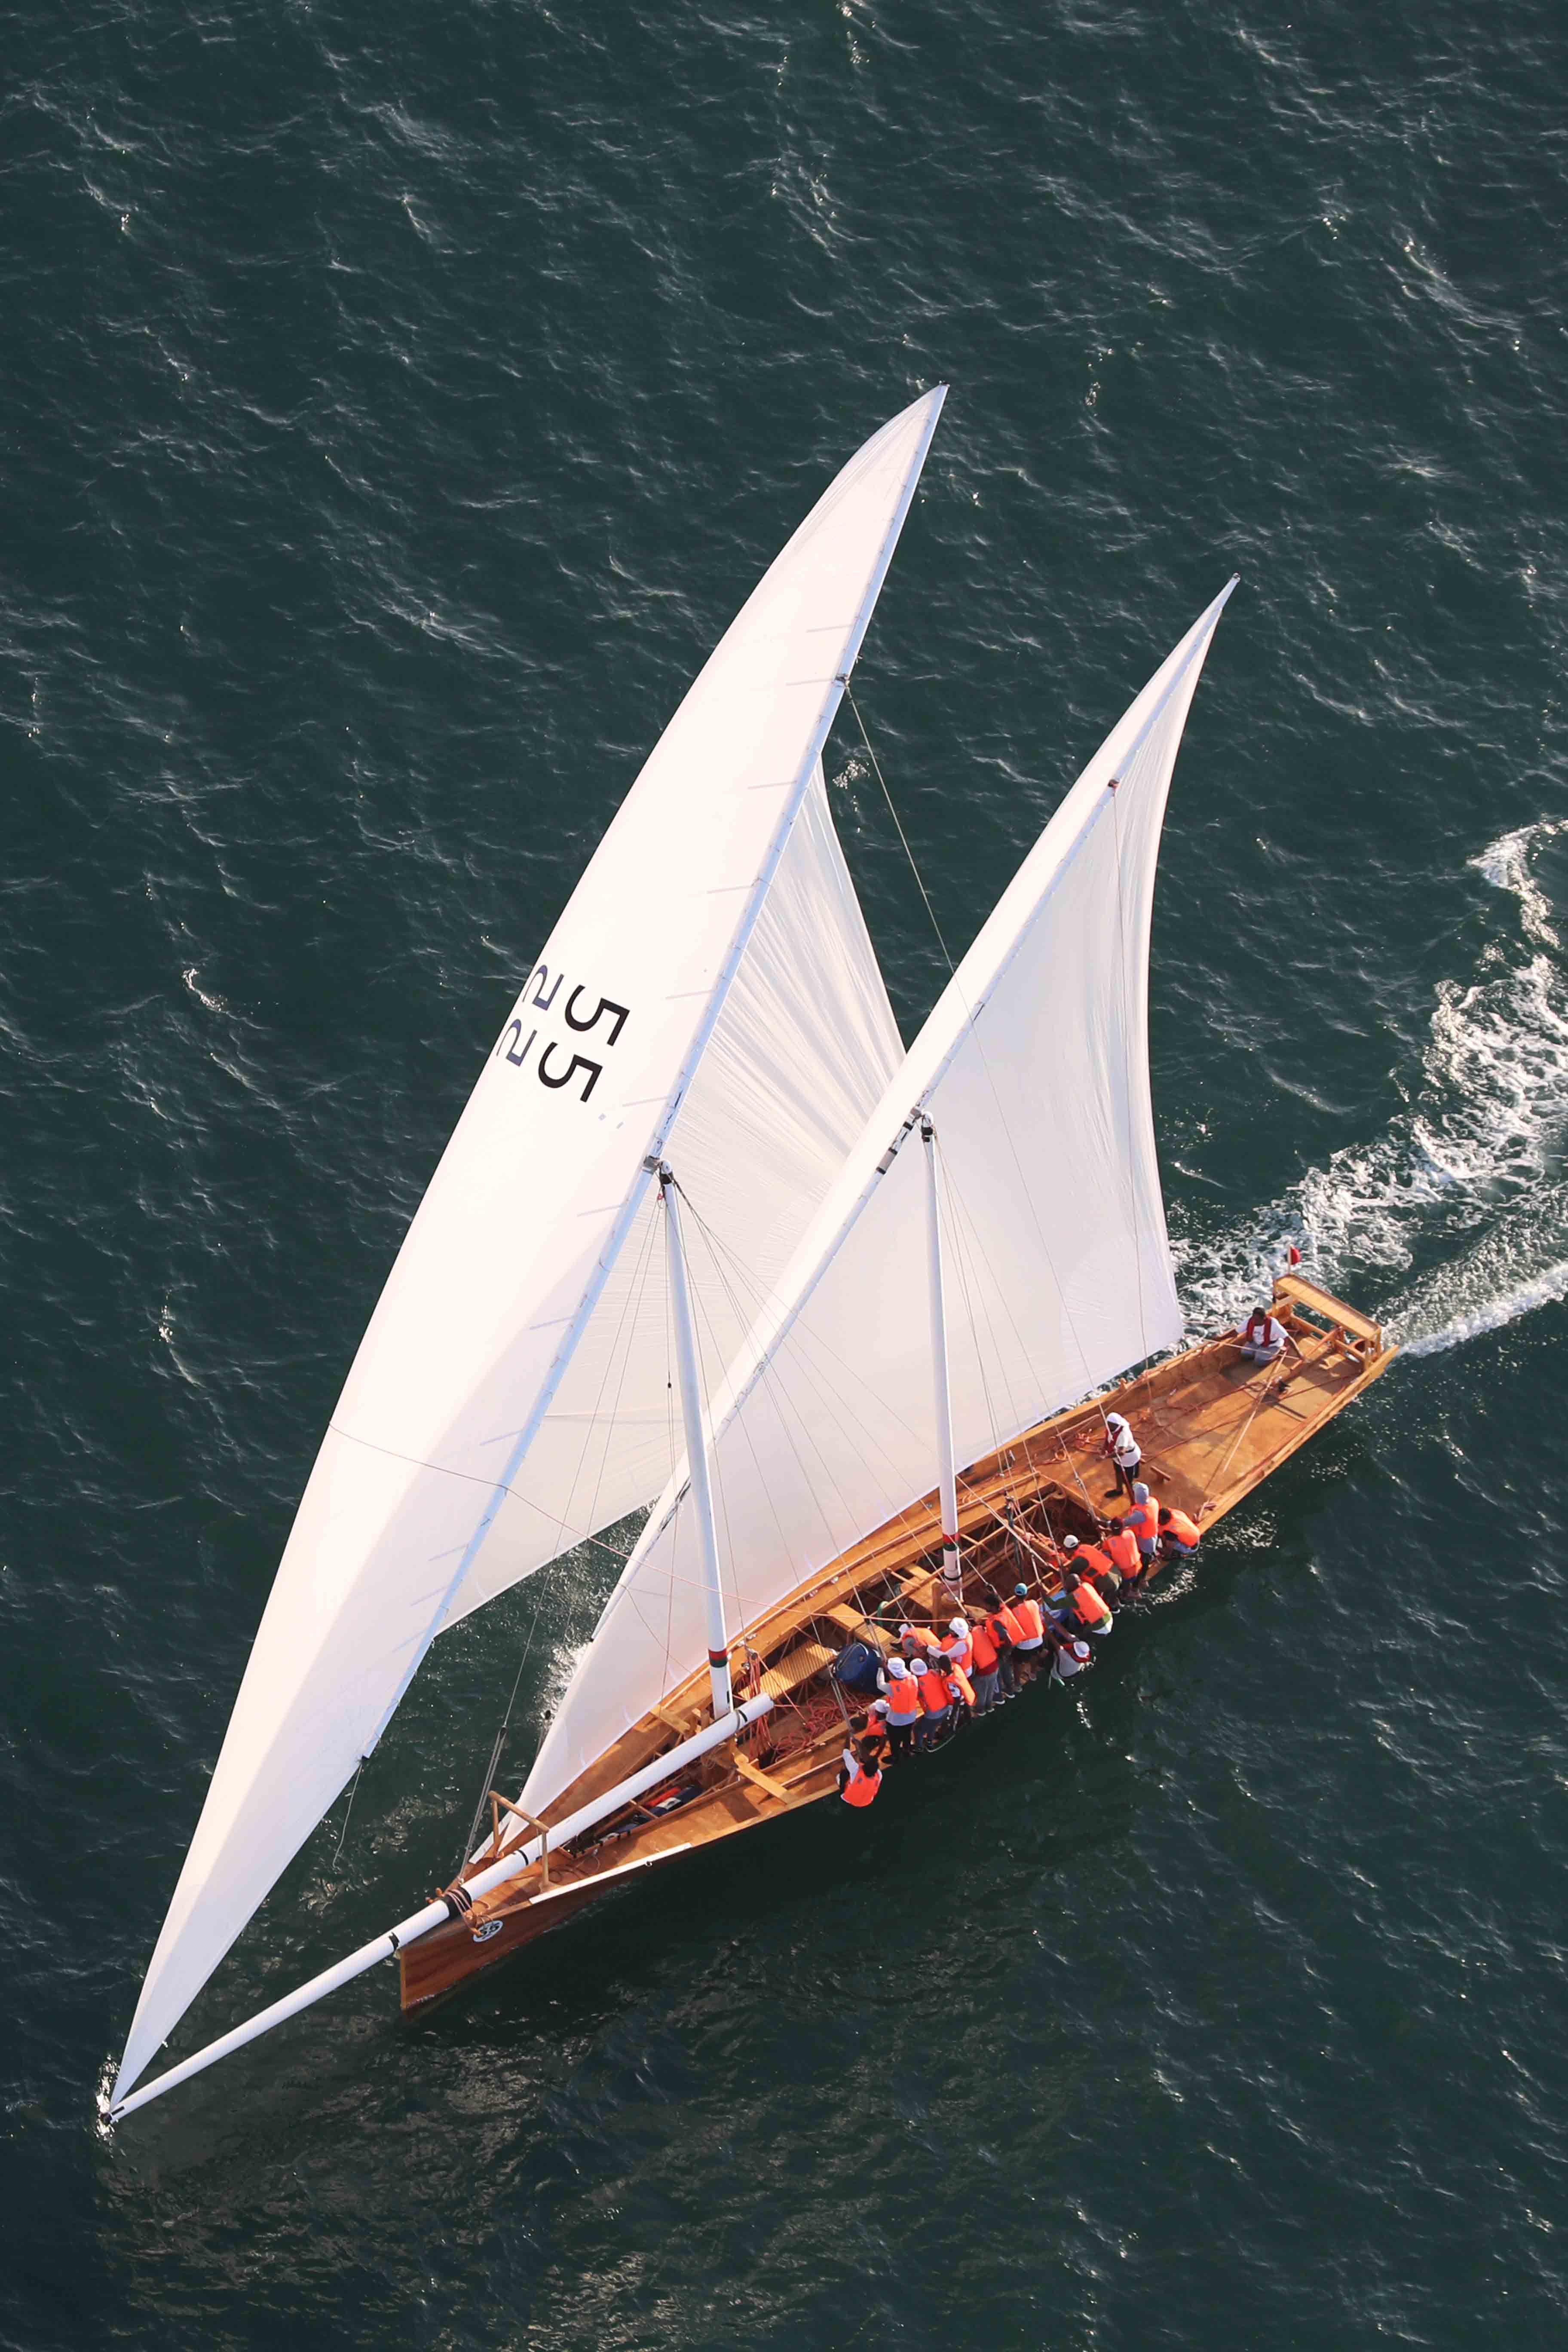 Dhow Sailing Race (60ft) on Dubai Shore Tomorrow